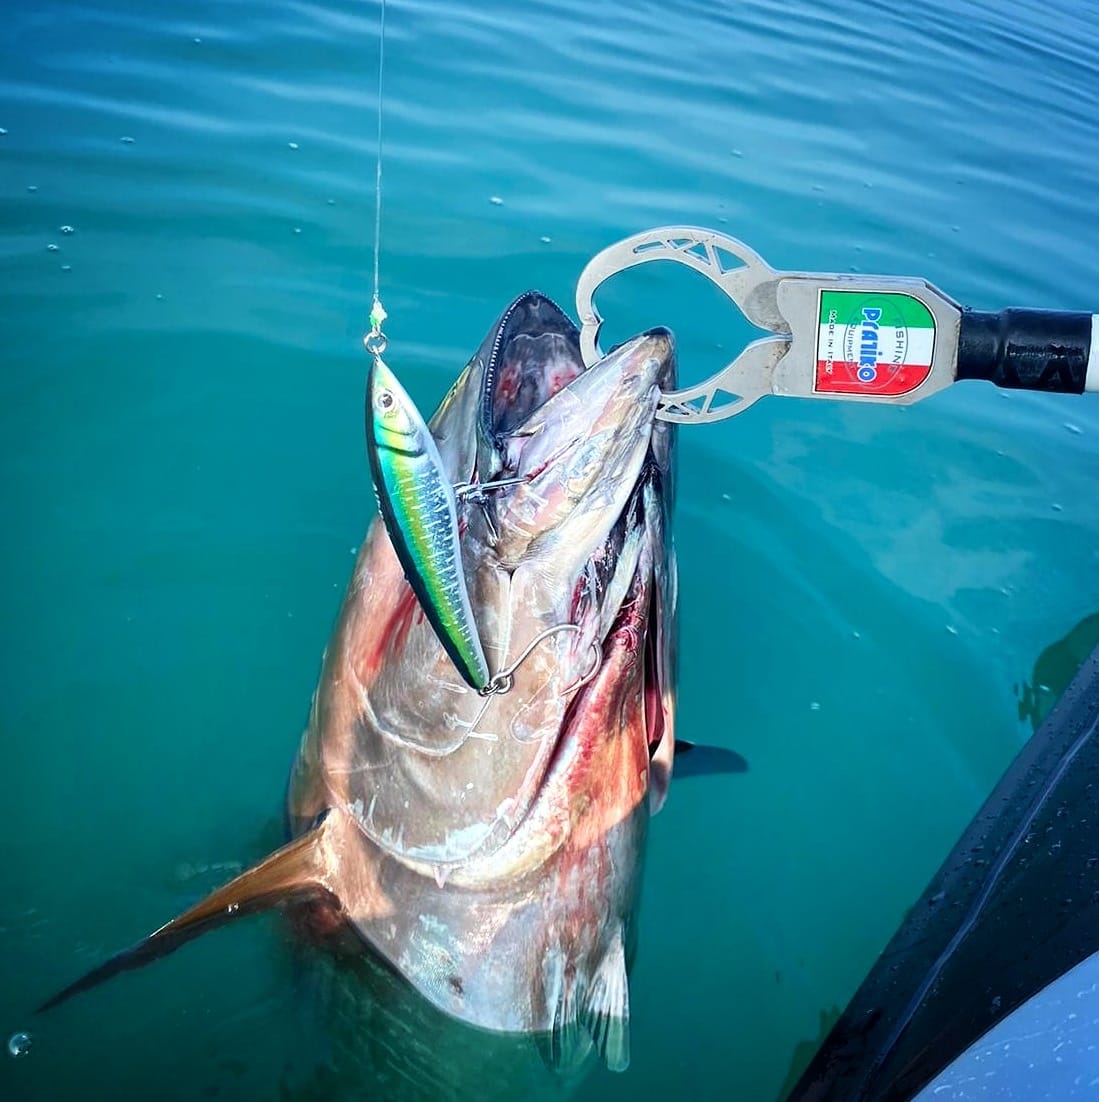 https://garonerods.com/wp-content/uploads/2021/07/Crealures-Bonito-160-Yellowfin-Tuna-Bluefin-tuna.jpeg